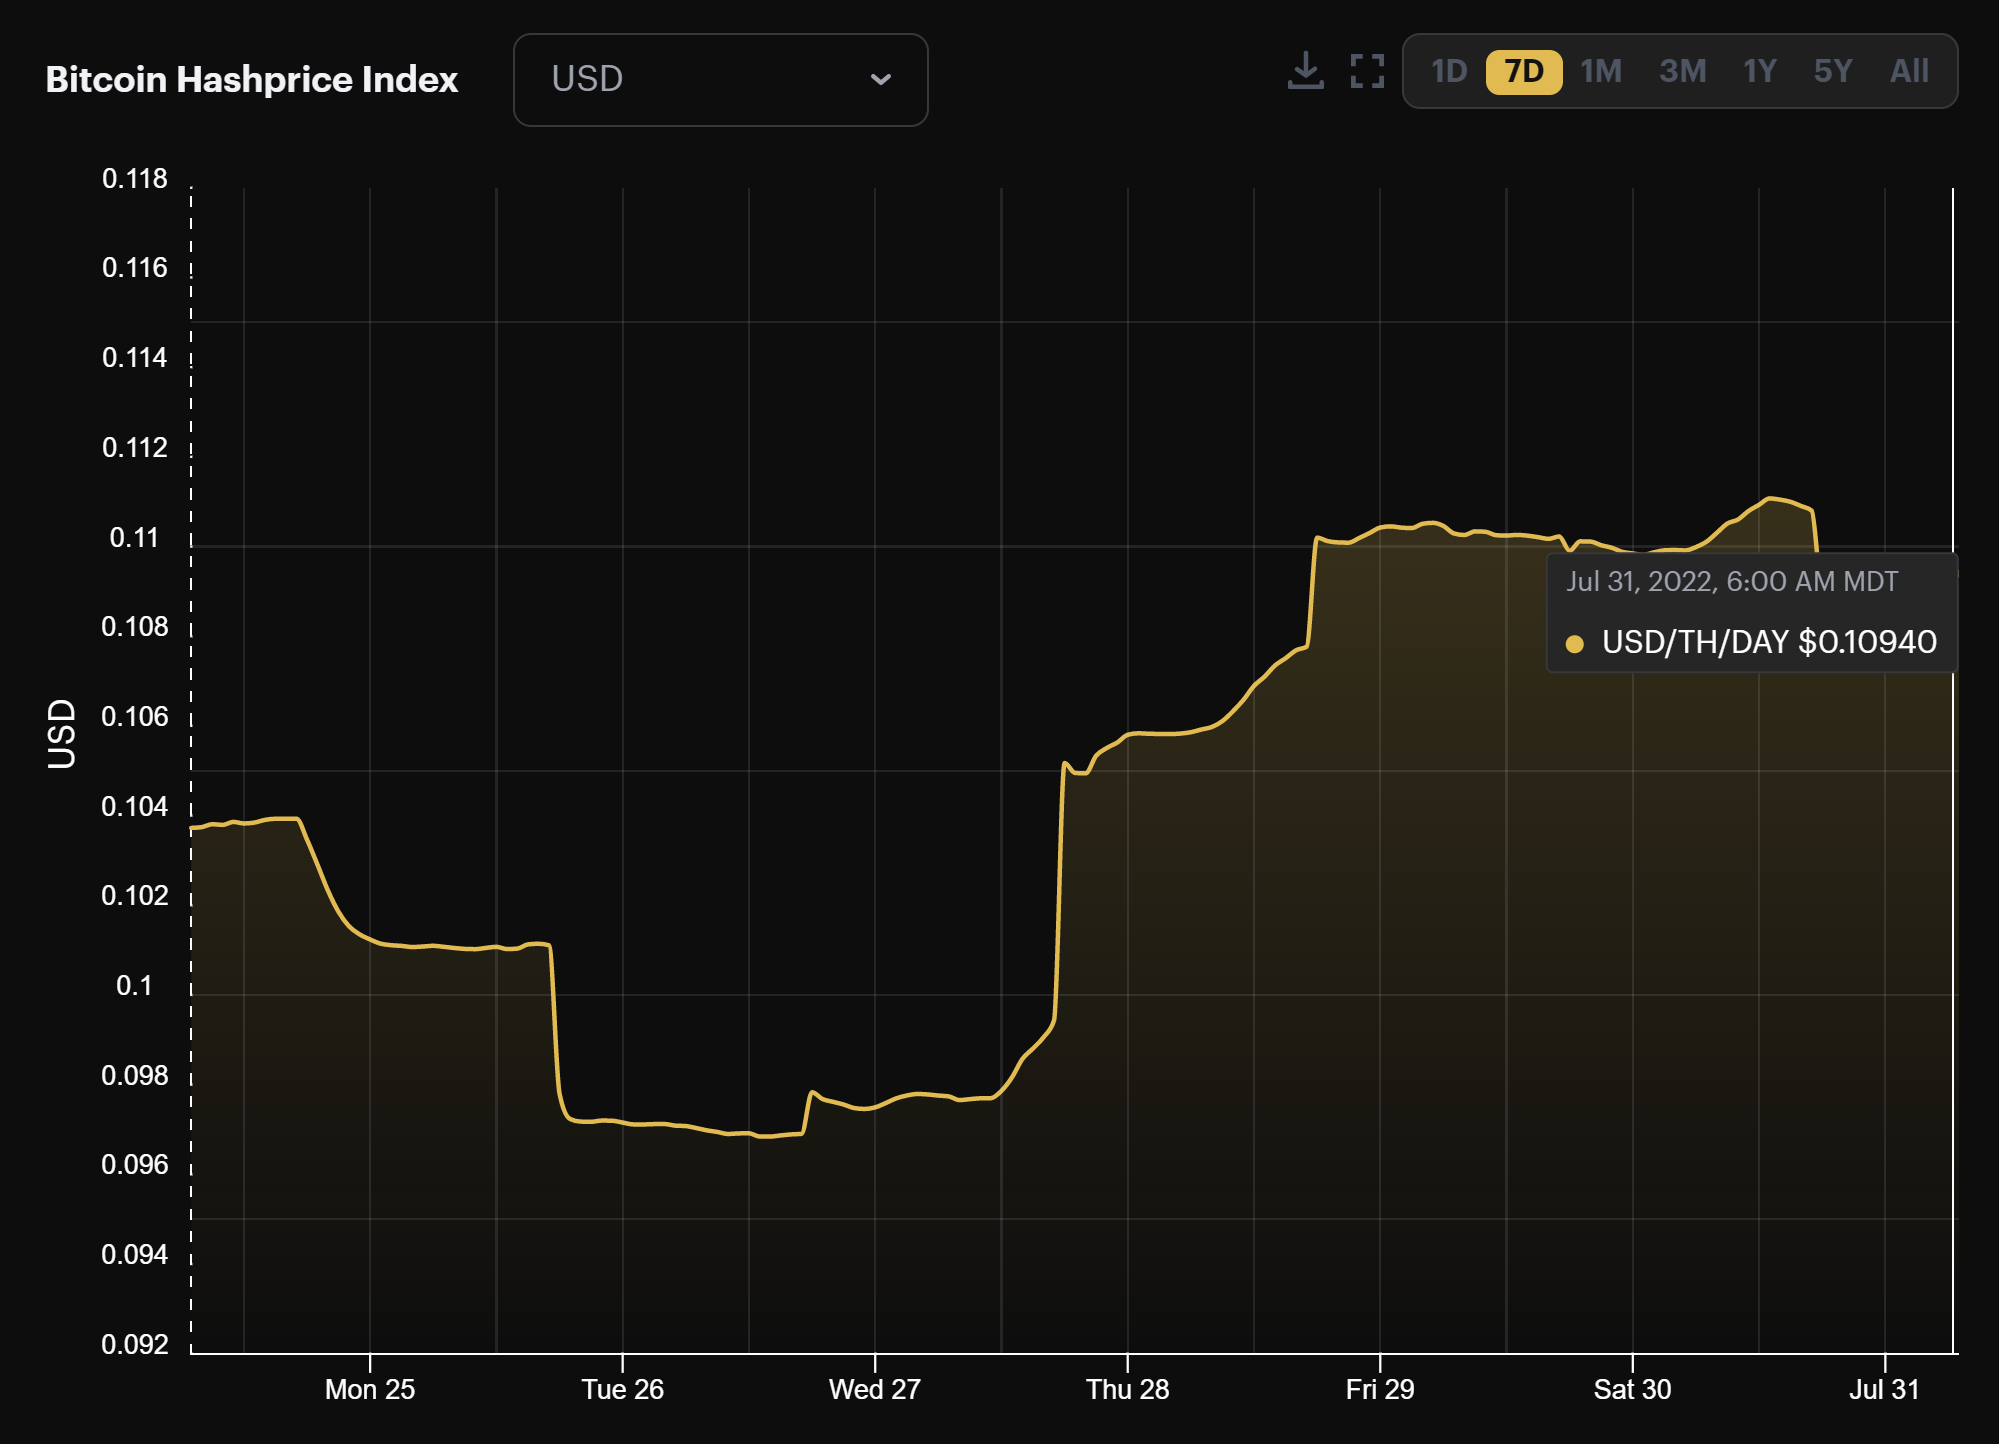 Bitcoin mining USD hashprice (July 24 - July 31, 2022)